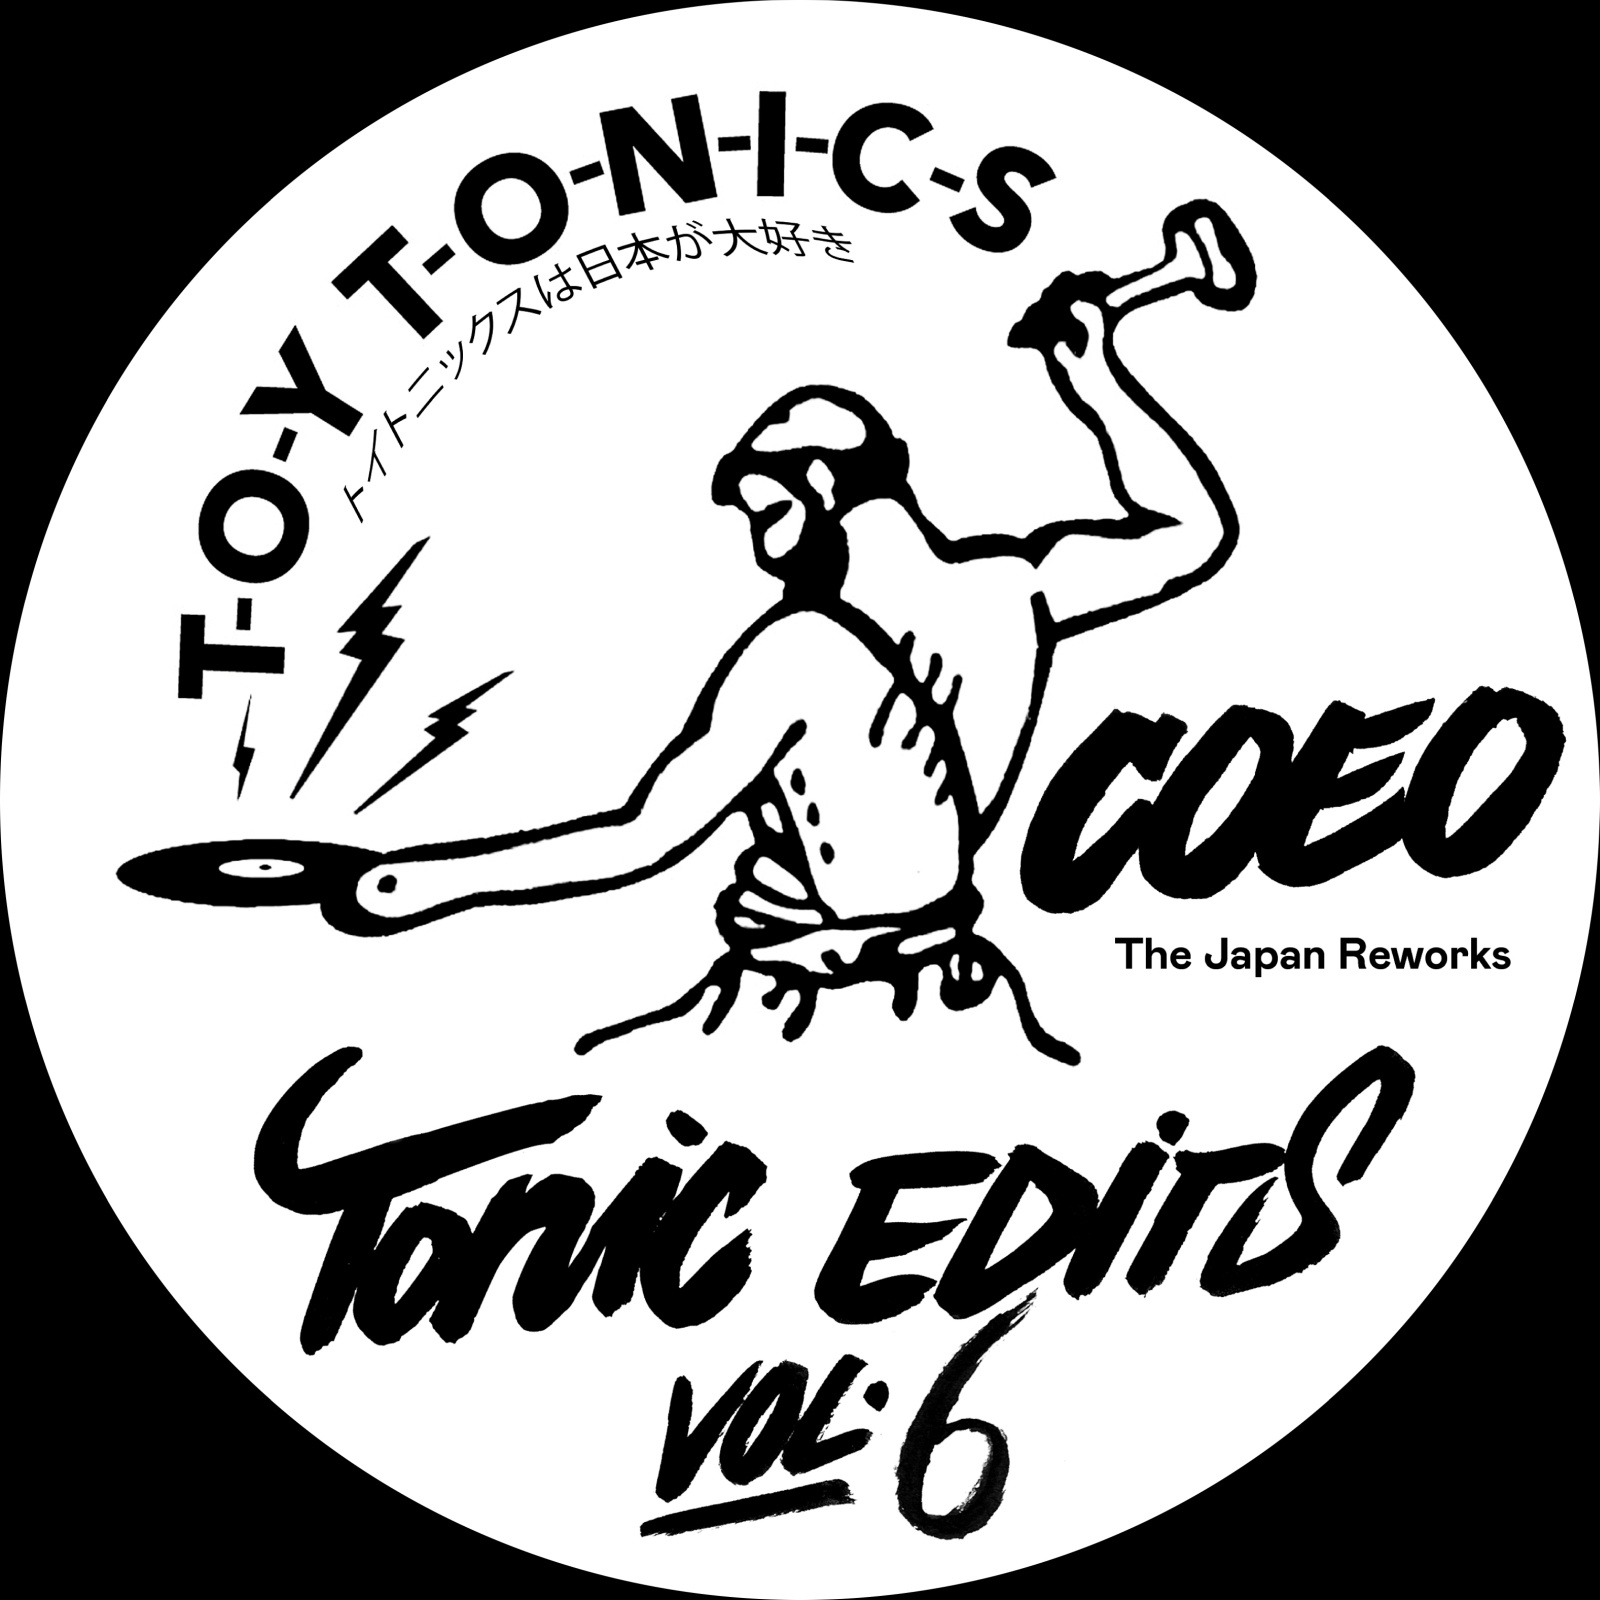 COEO - Tonic Edits Vol. 6 [TOYT096]